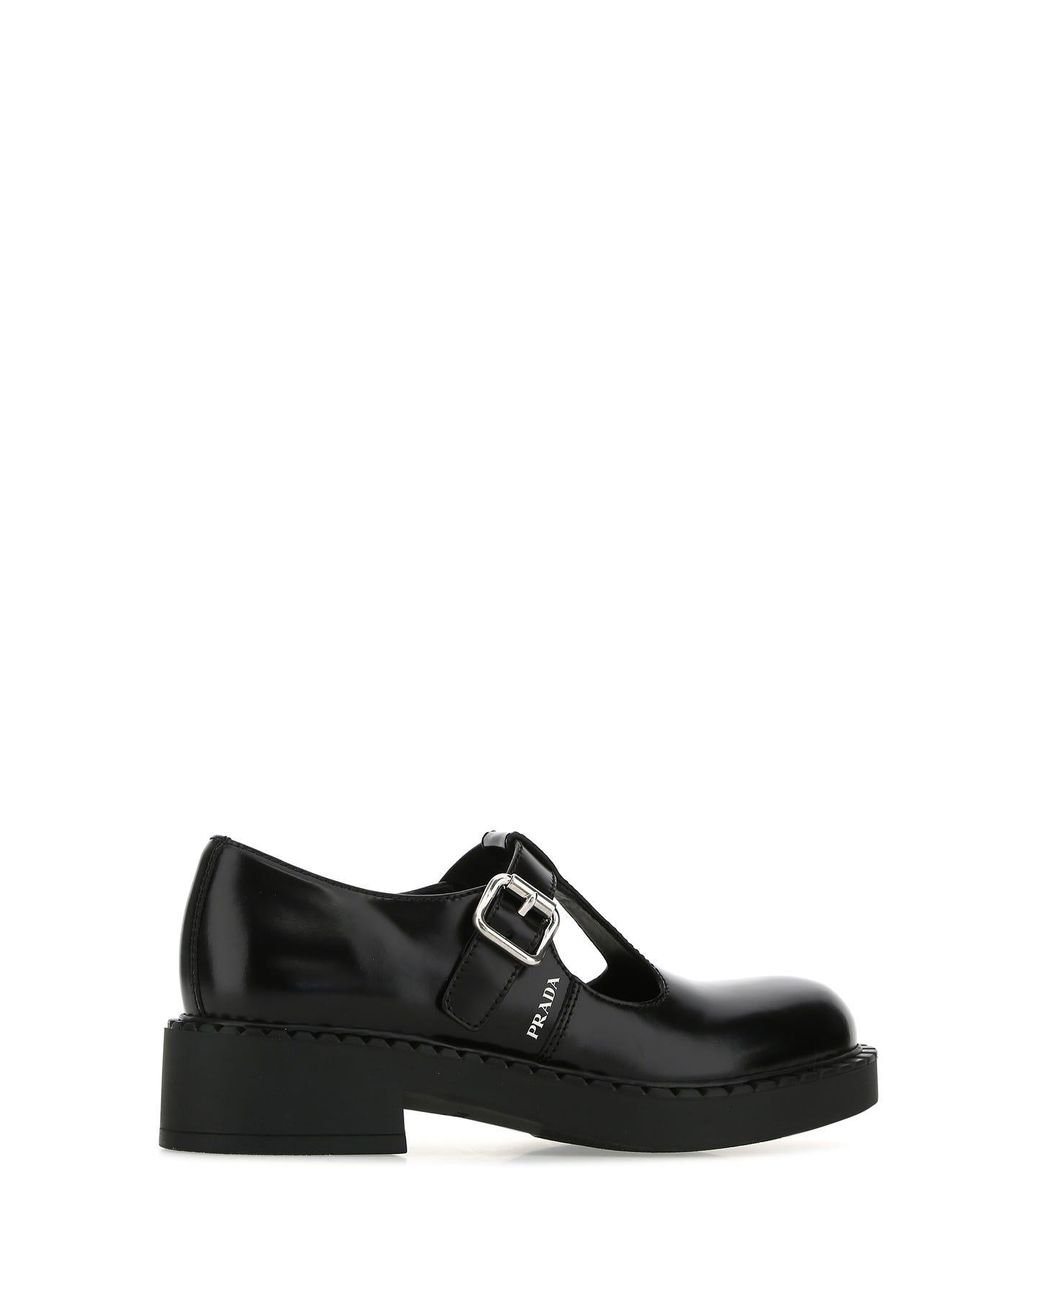 Prada Black Leather Monk Strap Shoes | Lyst